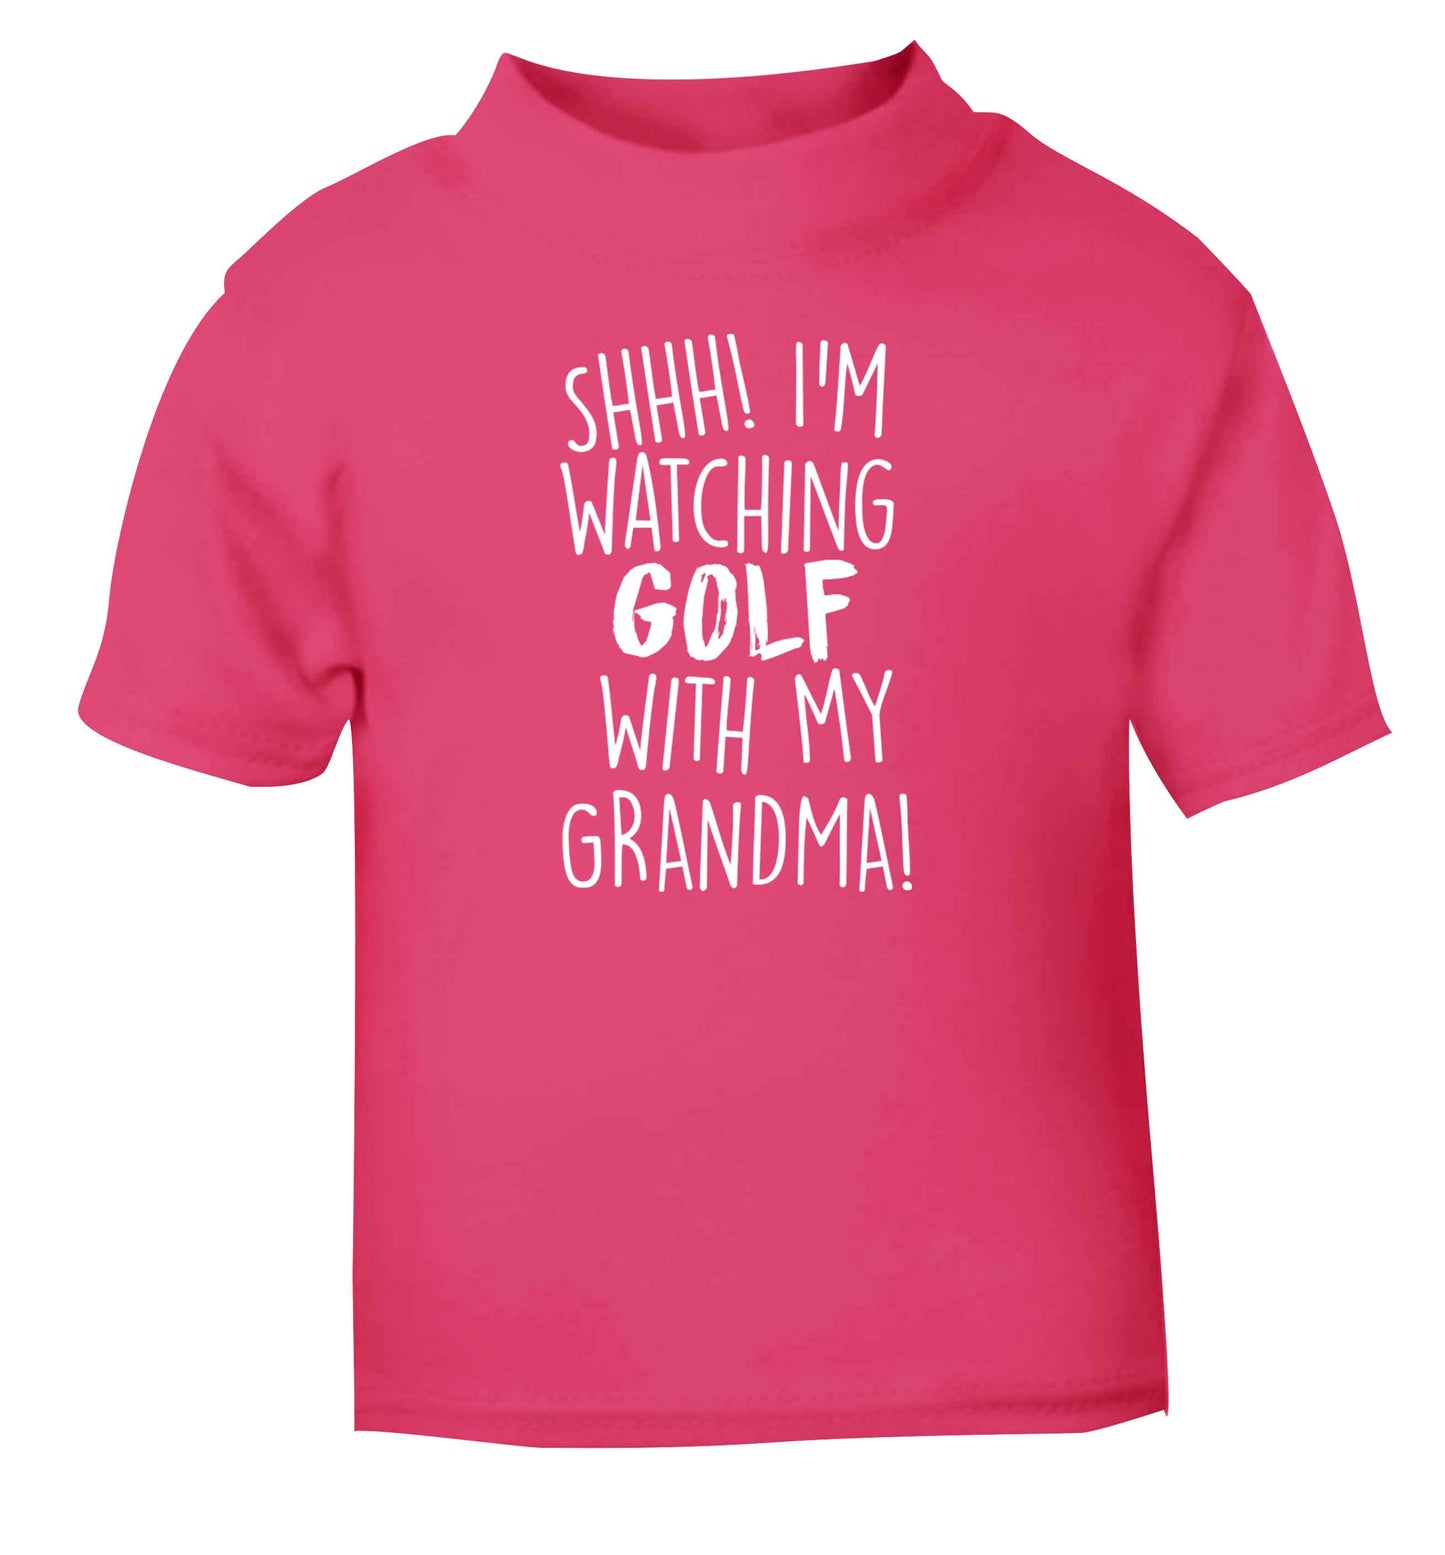 Shh I'm watching golf with my grandma pink Baby Toddler Tshirt 2 Years